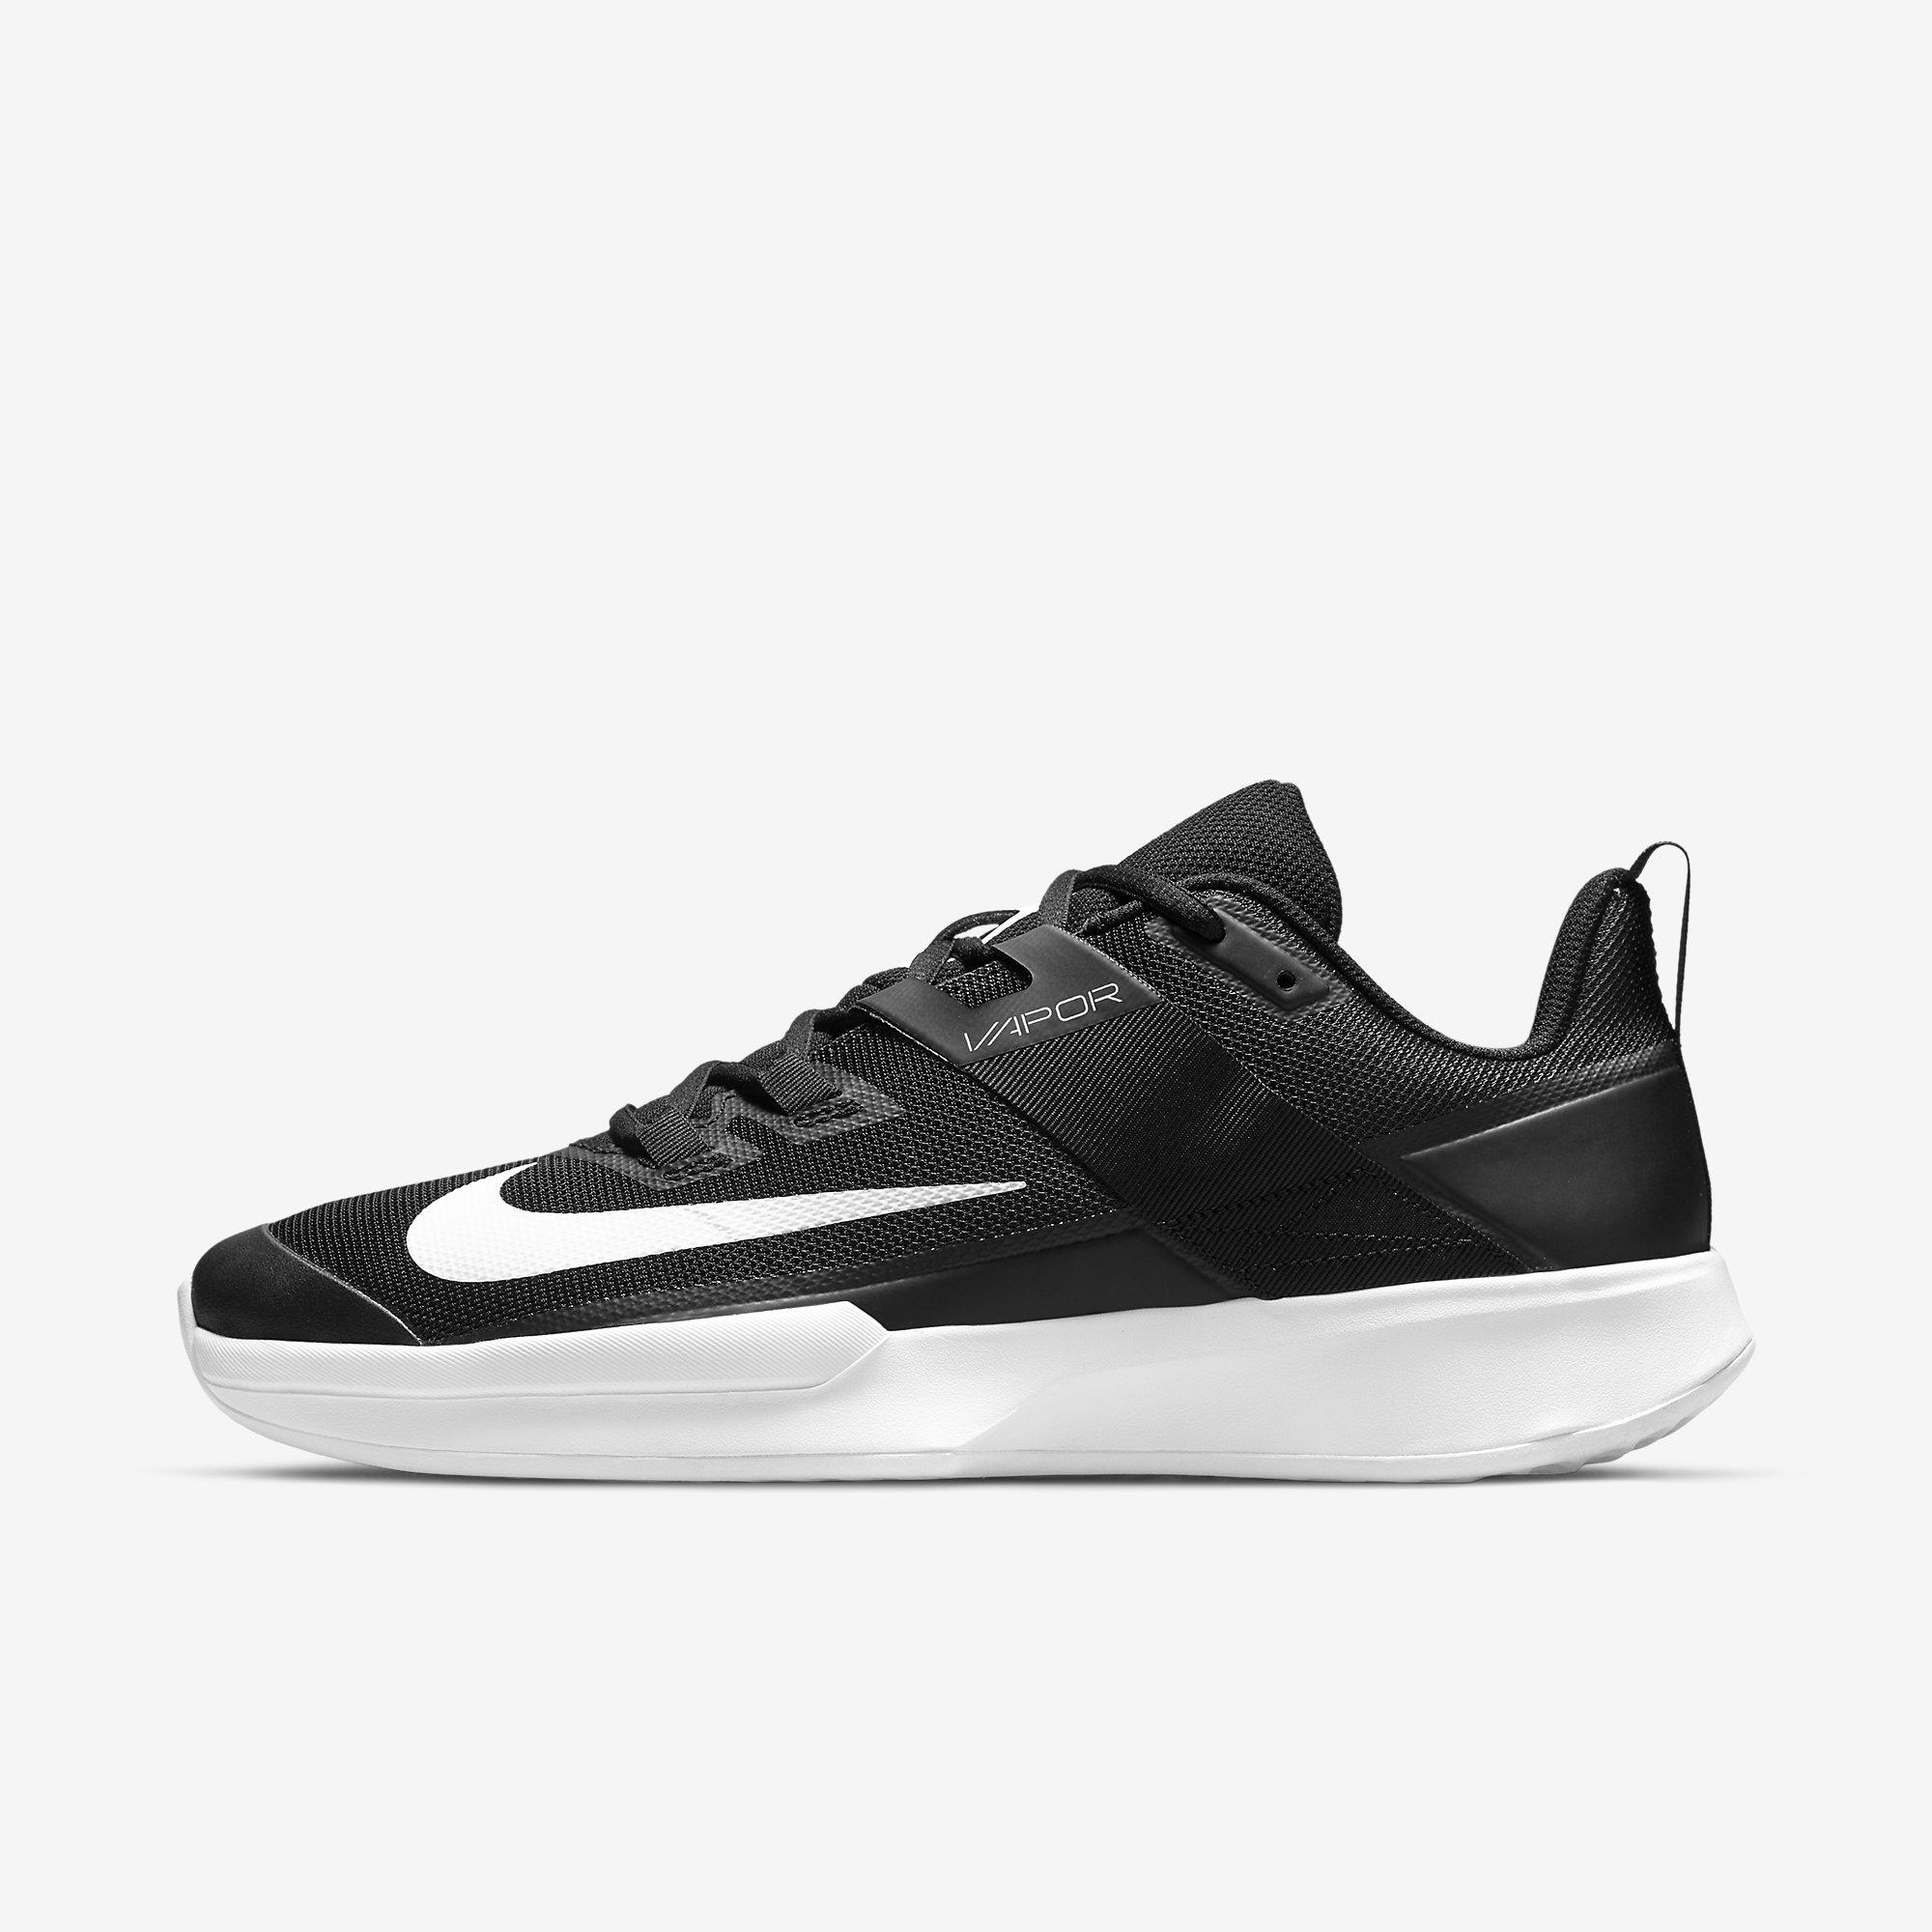 Nike Kids Vapor Lite Tennis Shoes - Black/White - Tennisnuts.com